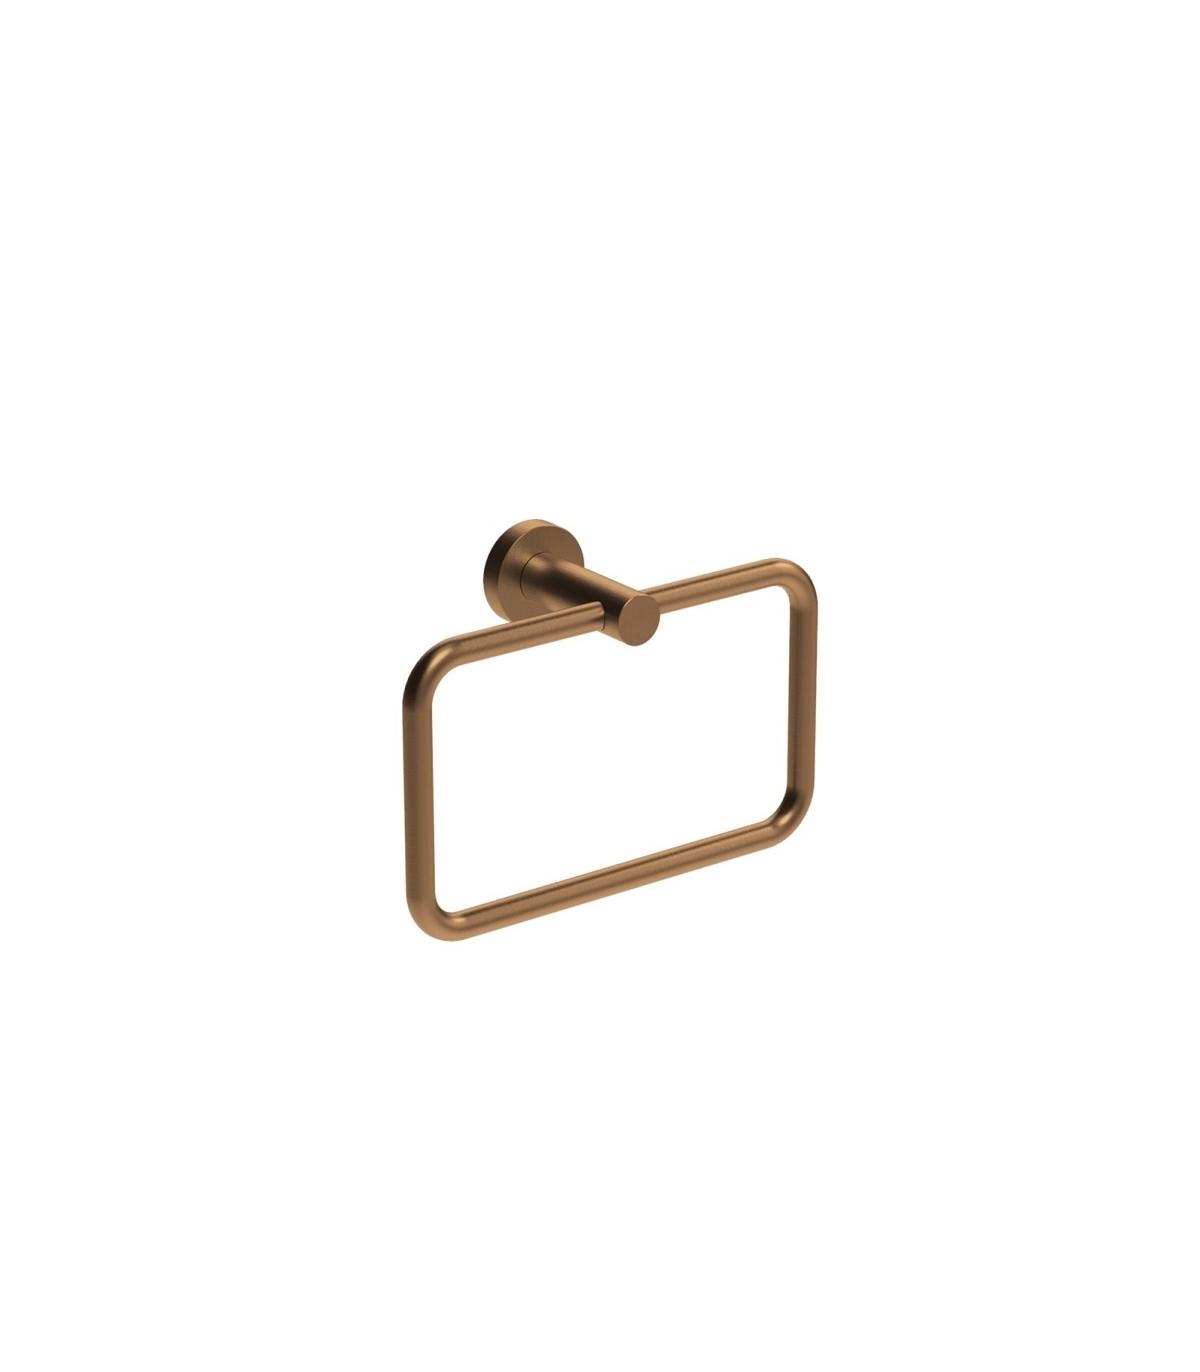 BASICQ B3731  Towel ring Chromed brass towel ring By Colombo Design